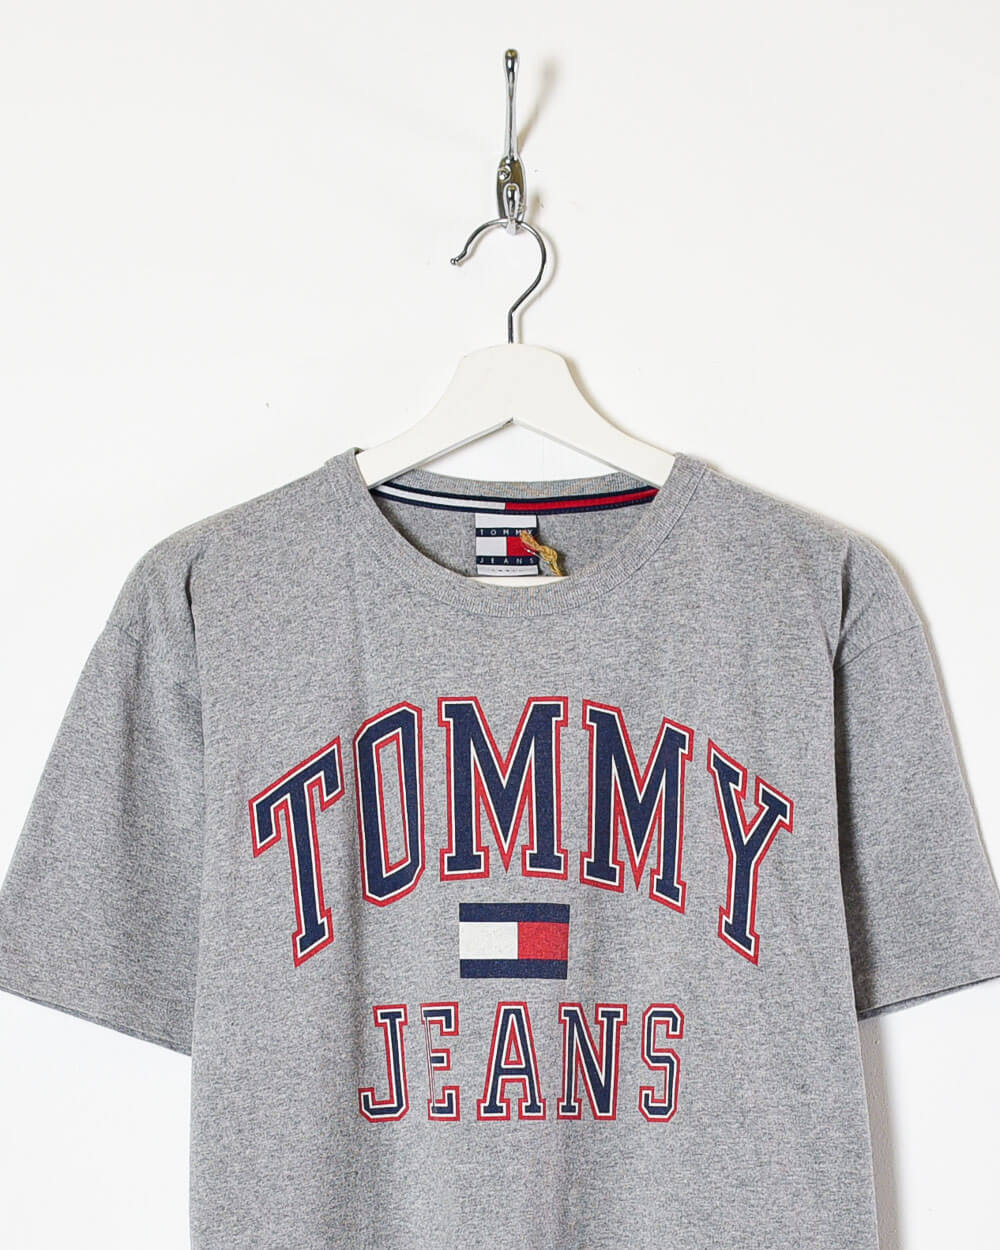 Stone Tommy Jeans T-Shirt - Medium